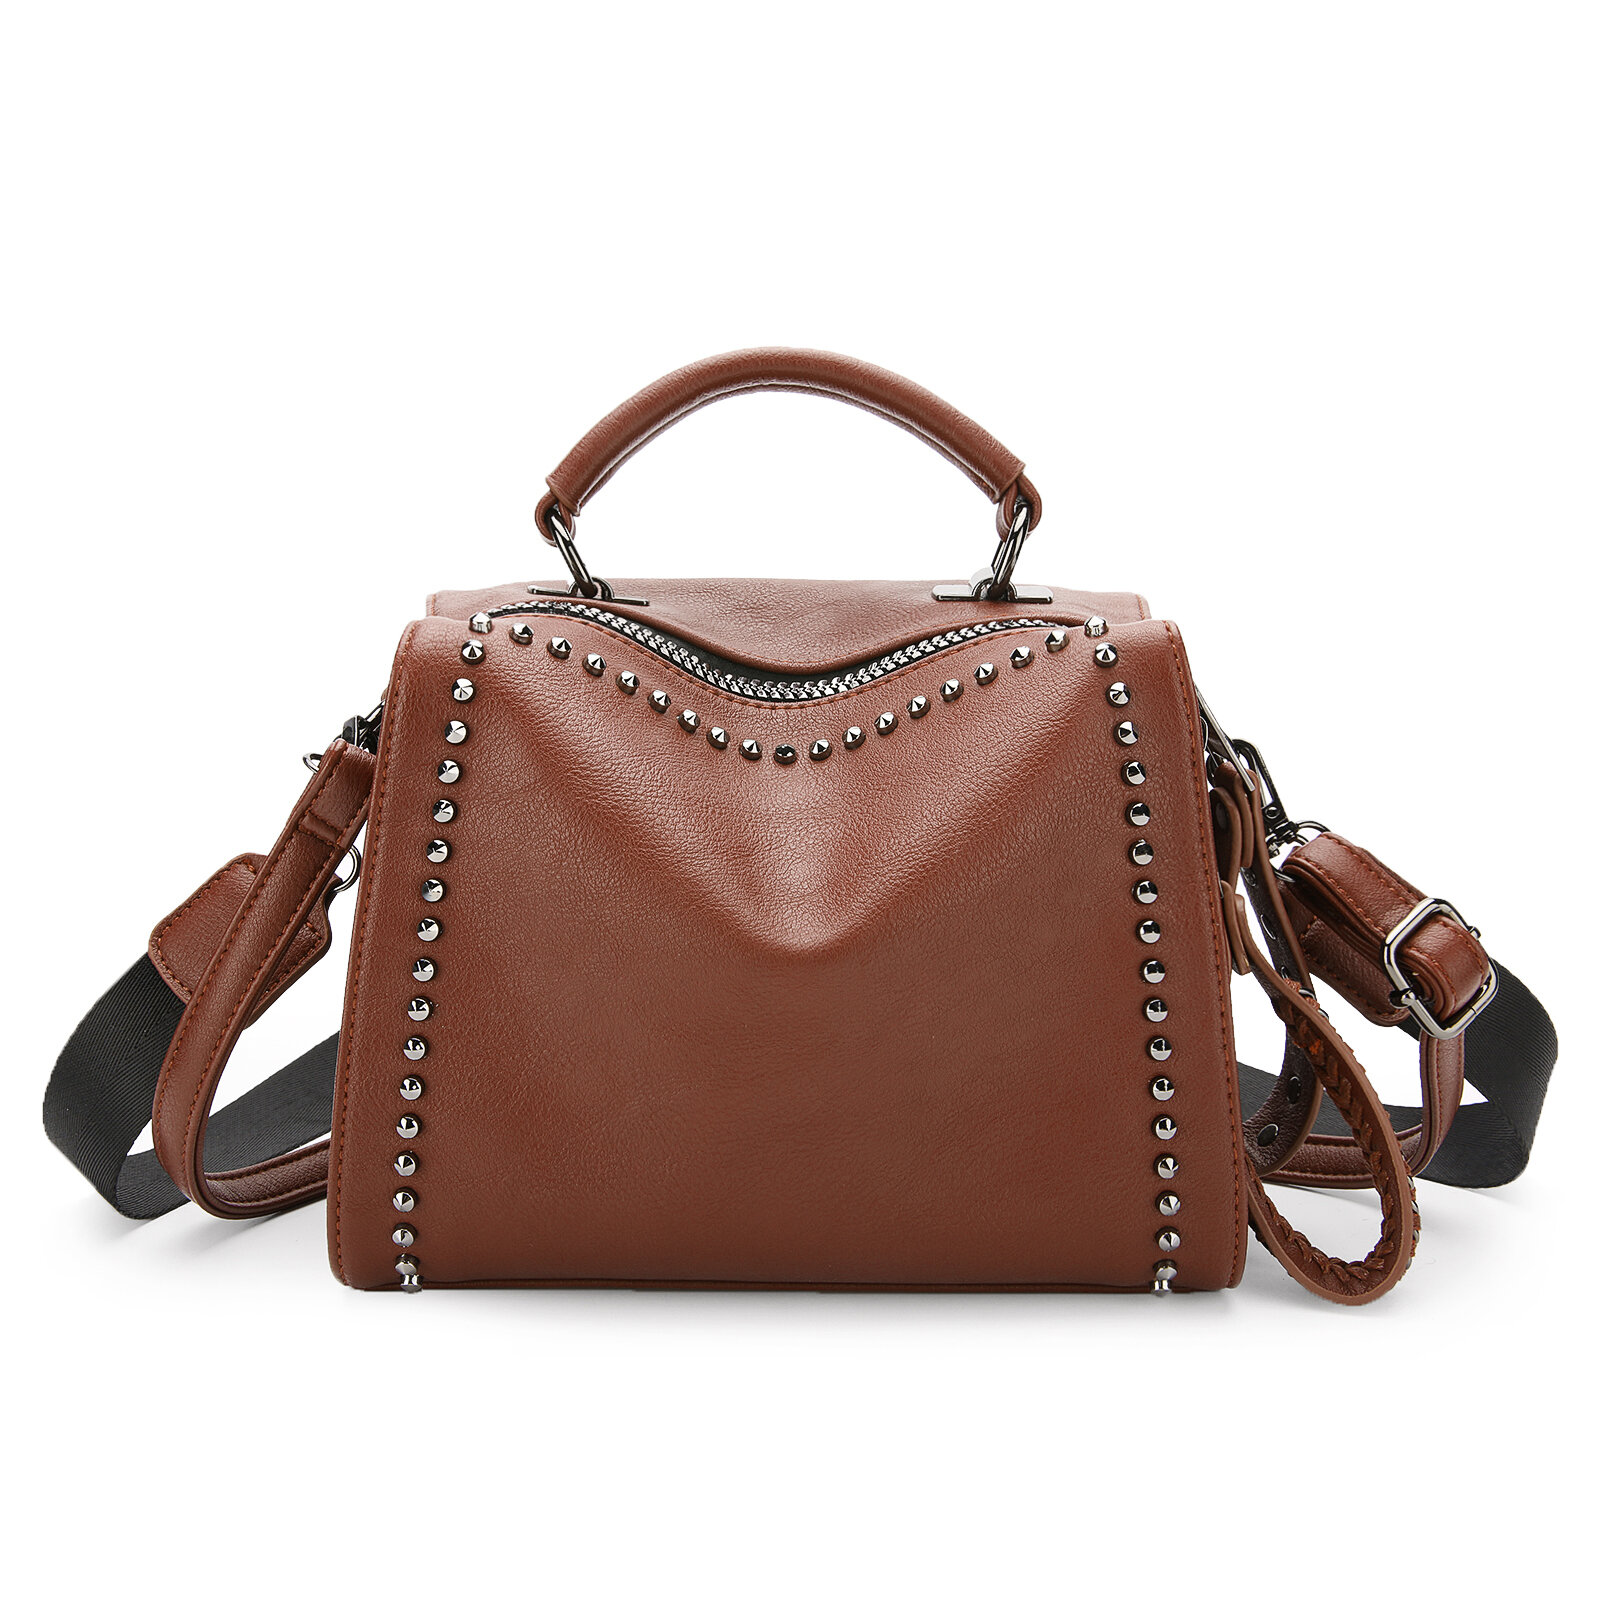 JOSEKO Women Faux Leather Rivets Solid Color Lady Shoulder Bag Crossbody Tote Handbag